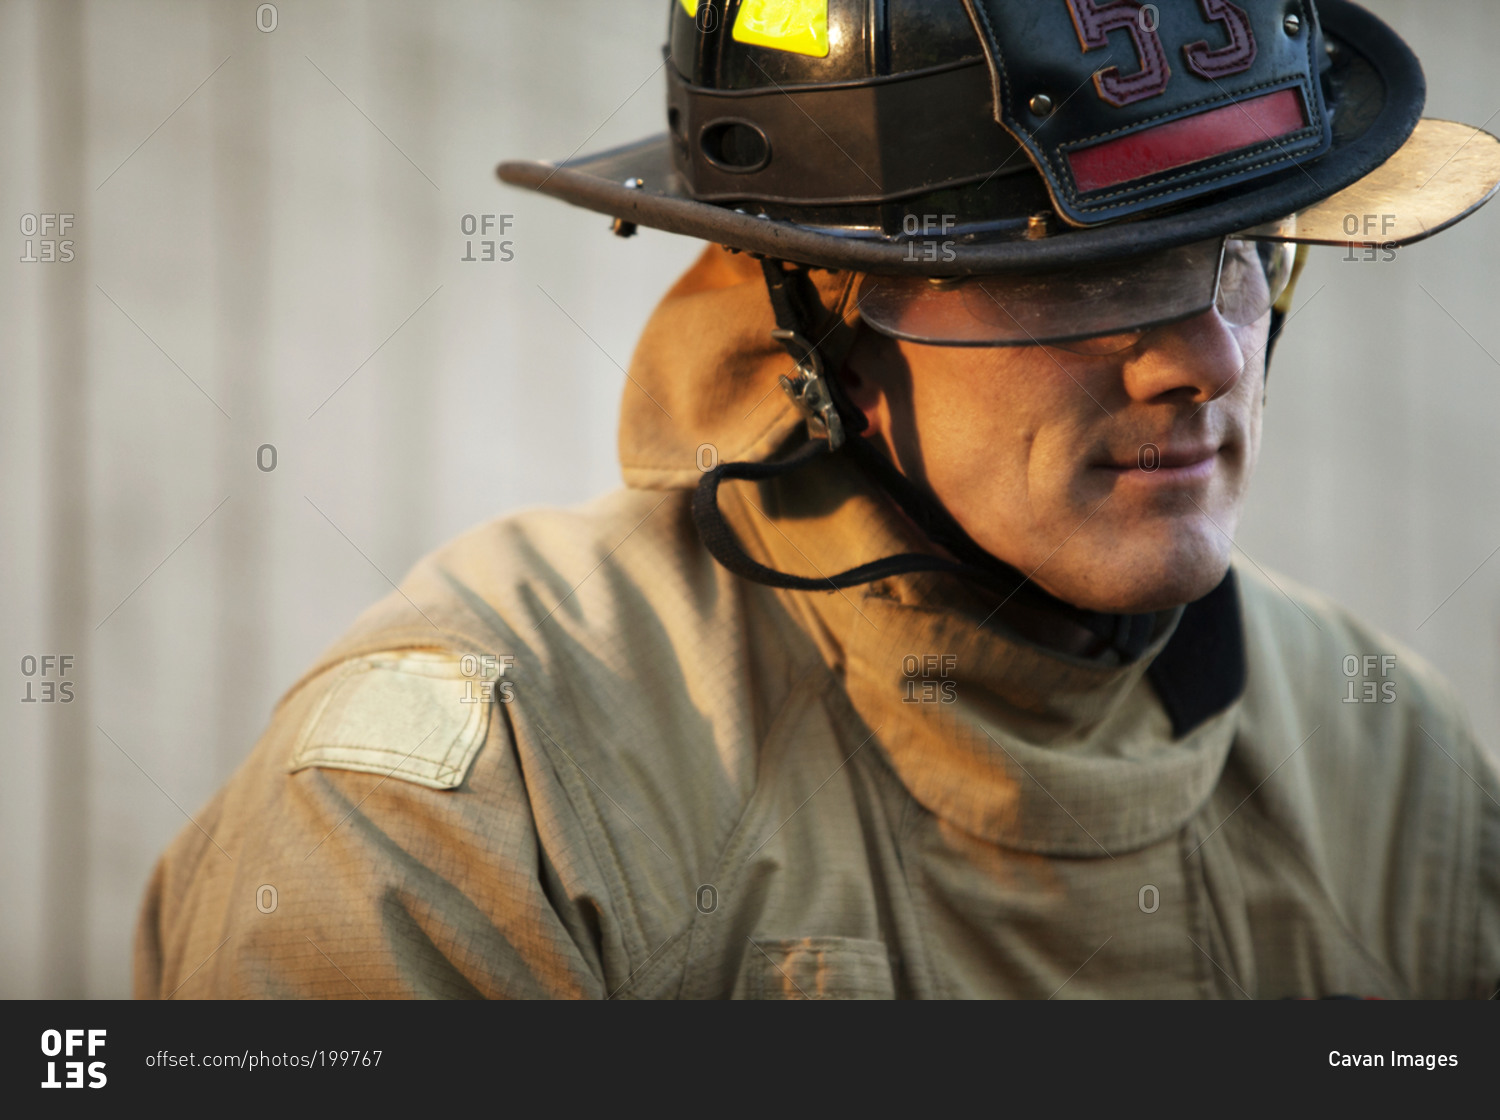 A fireman wearing his helmet